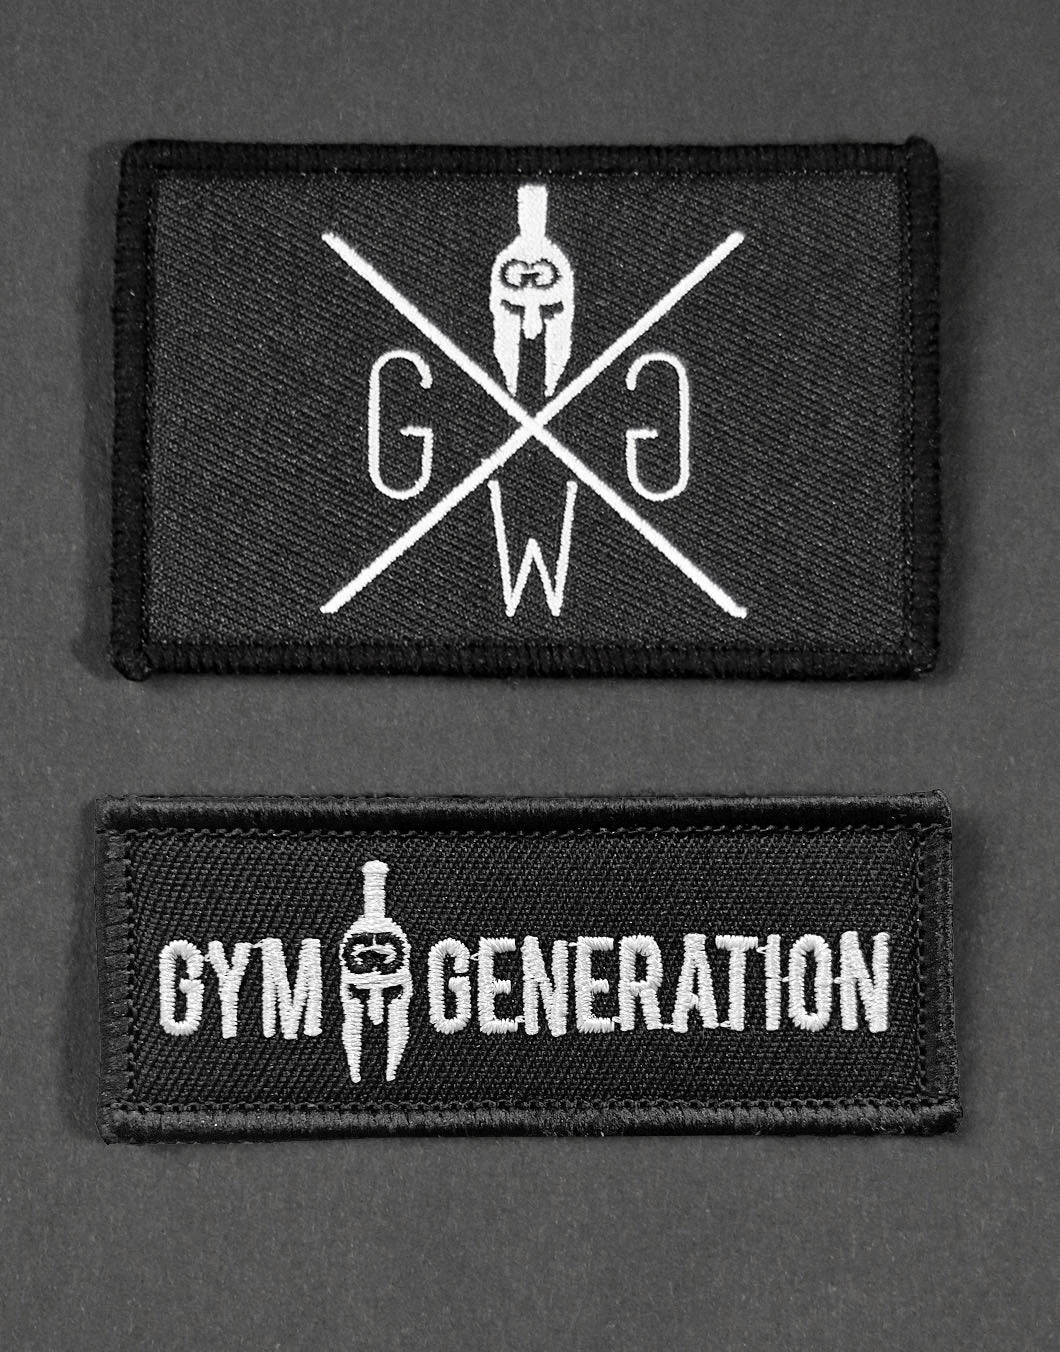 Fitness Rucksack Explorer - Black Camo - Gym Generation®--www.gymgeneration.ch